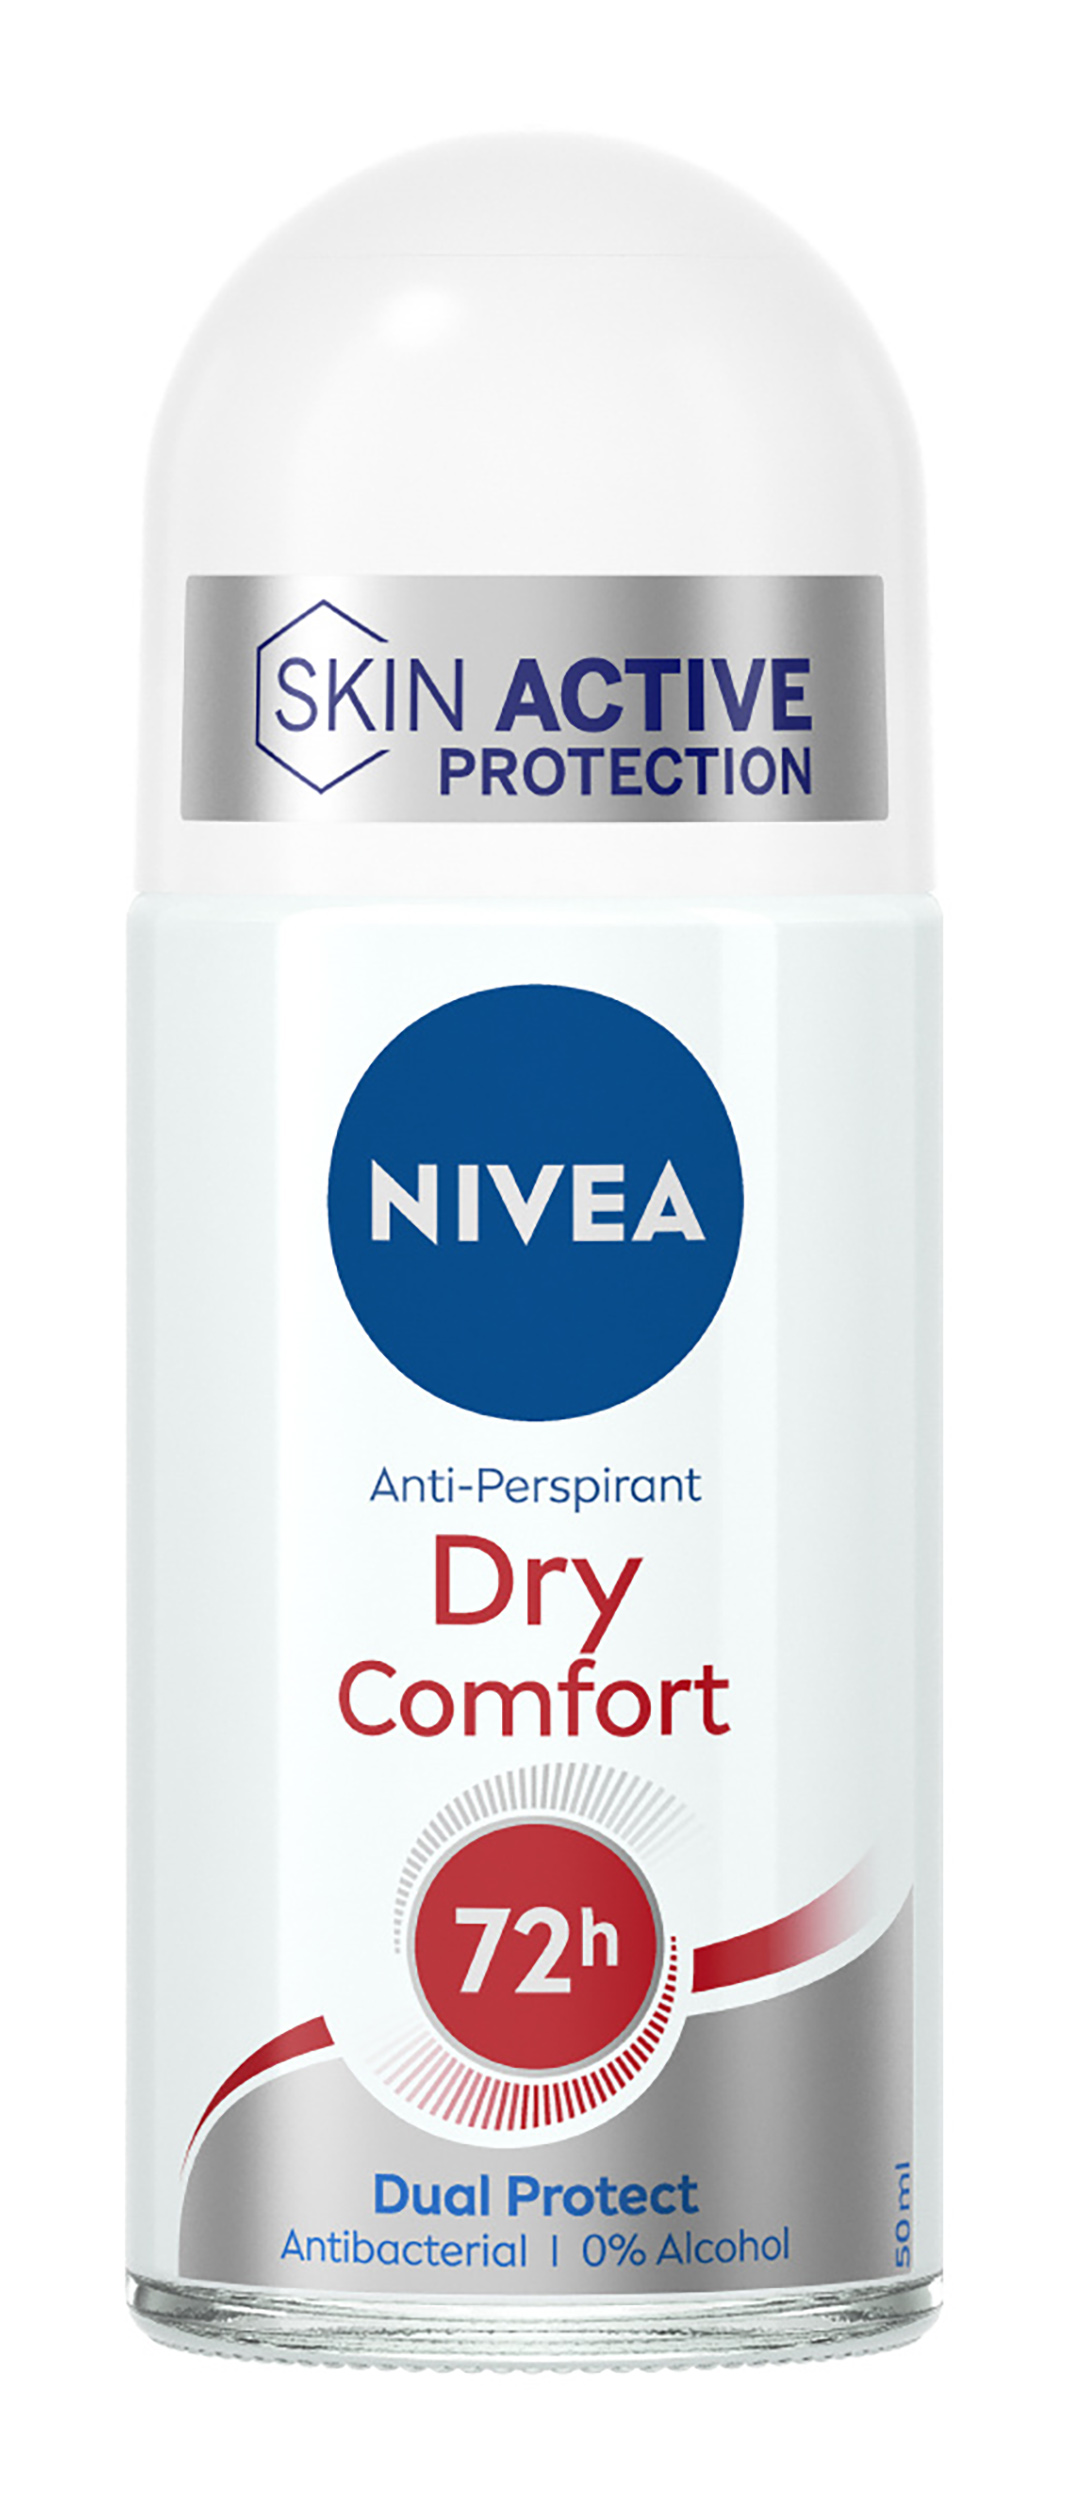 Antitranspirante NIVEA Active Dry Comfort Roll on 50ml